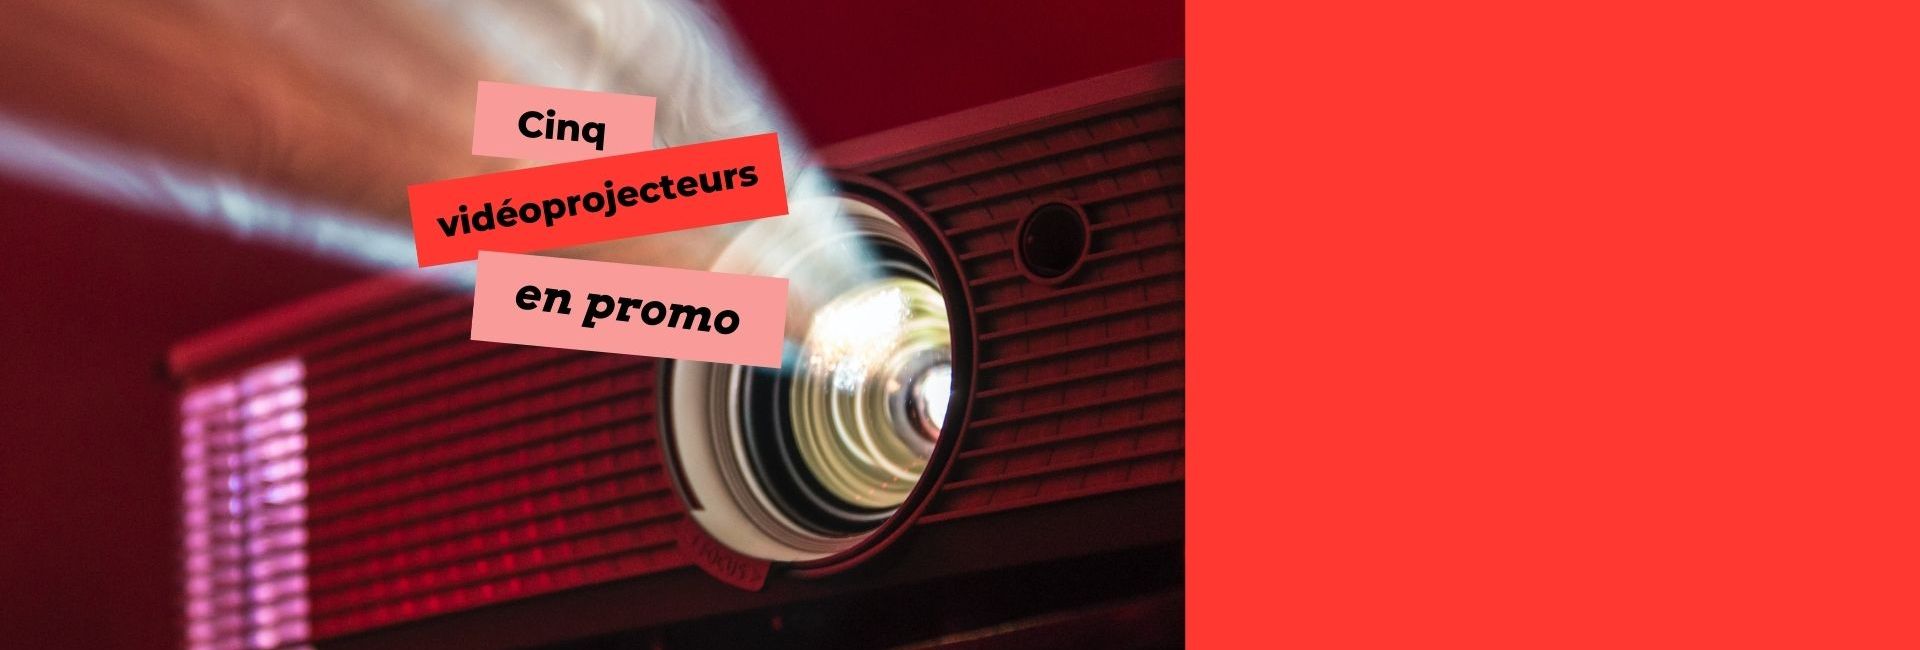 video_projecteurs_promo